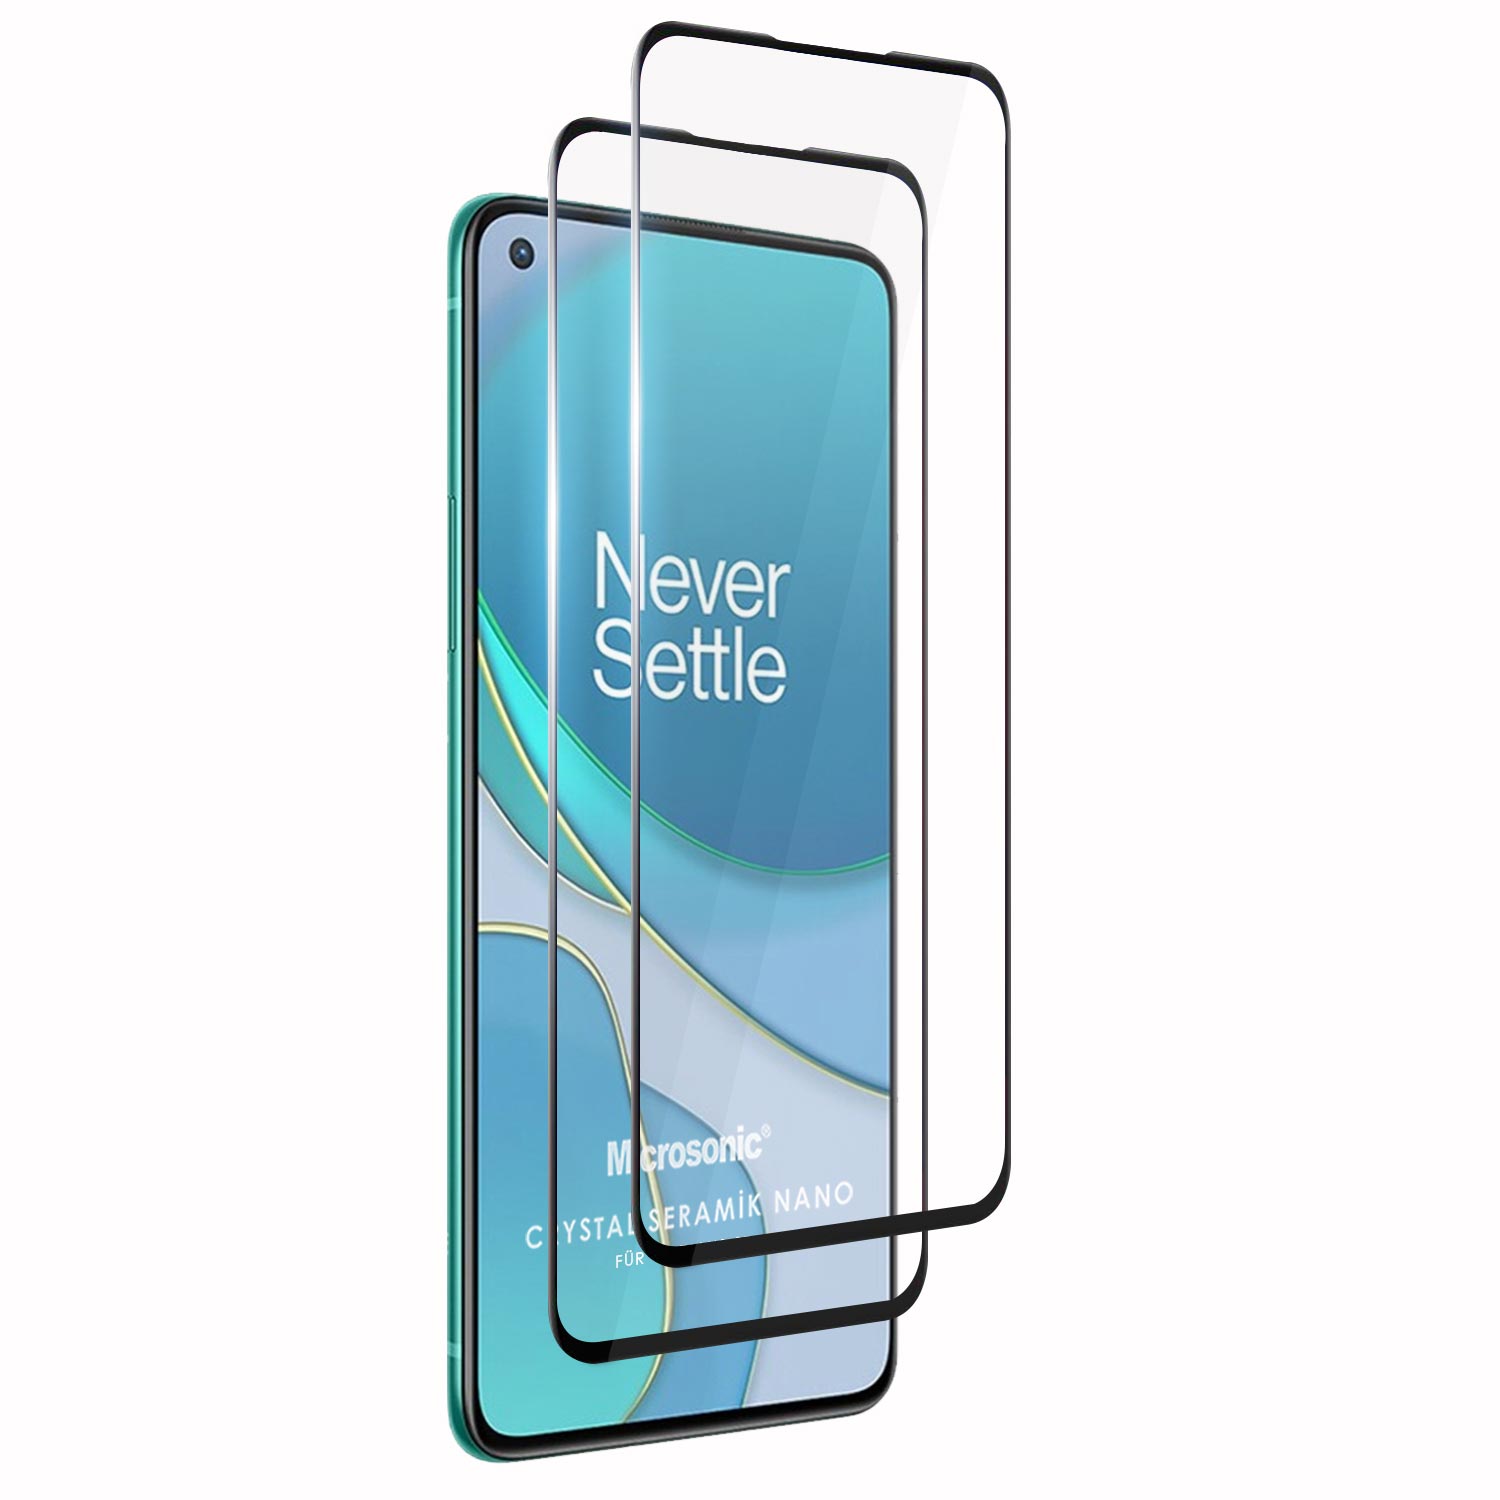 Microsonic OnePlus 8T Crystal Seramik Nano Ekran Koruyucu Siyah 2 Adet